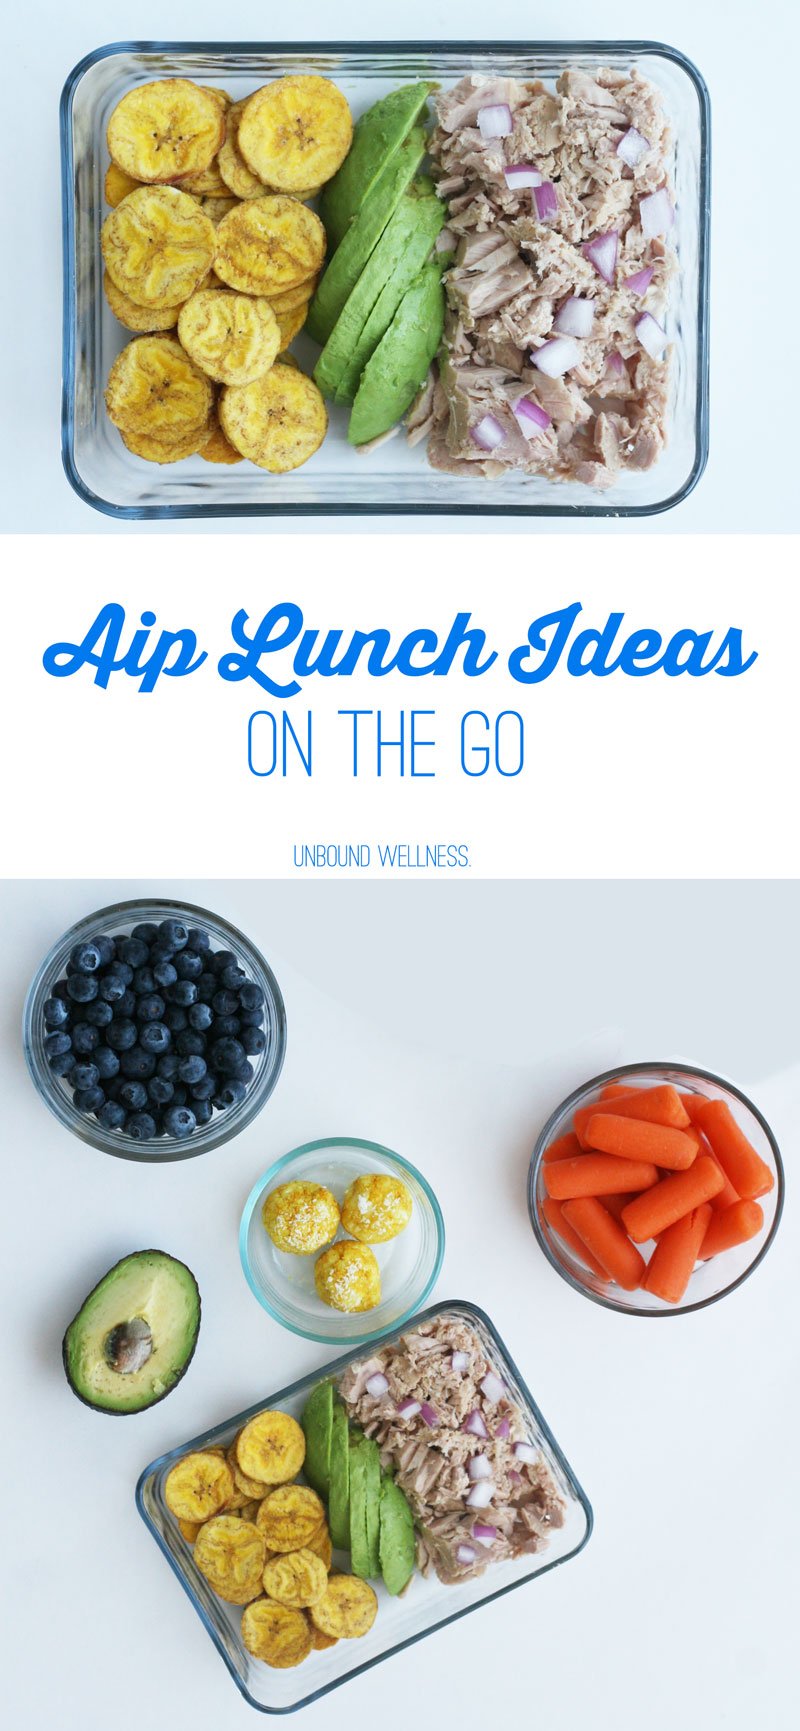 Easy AIP Lunch Ideas on the go